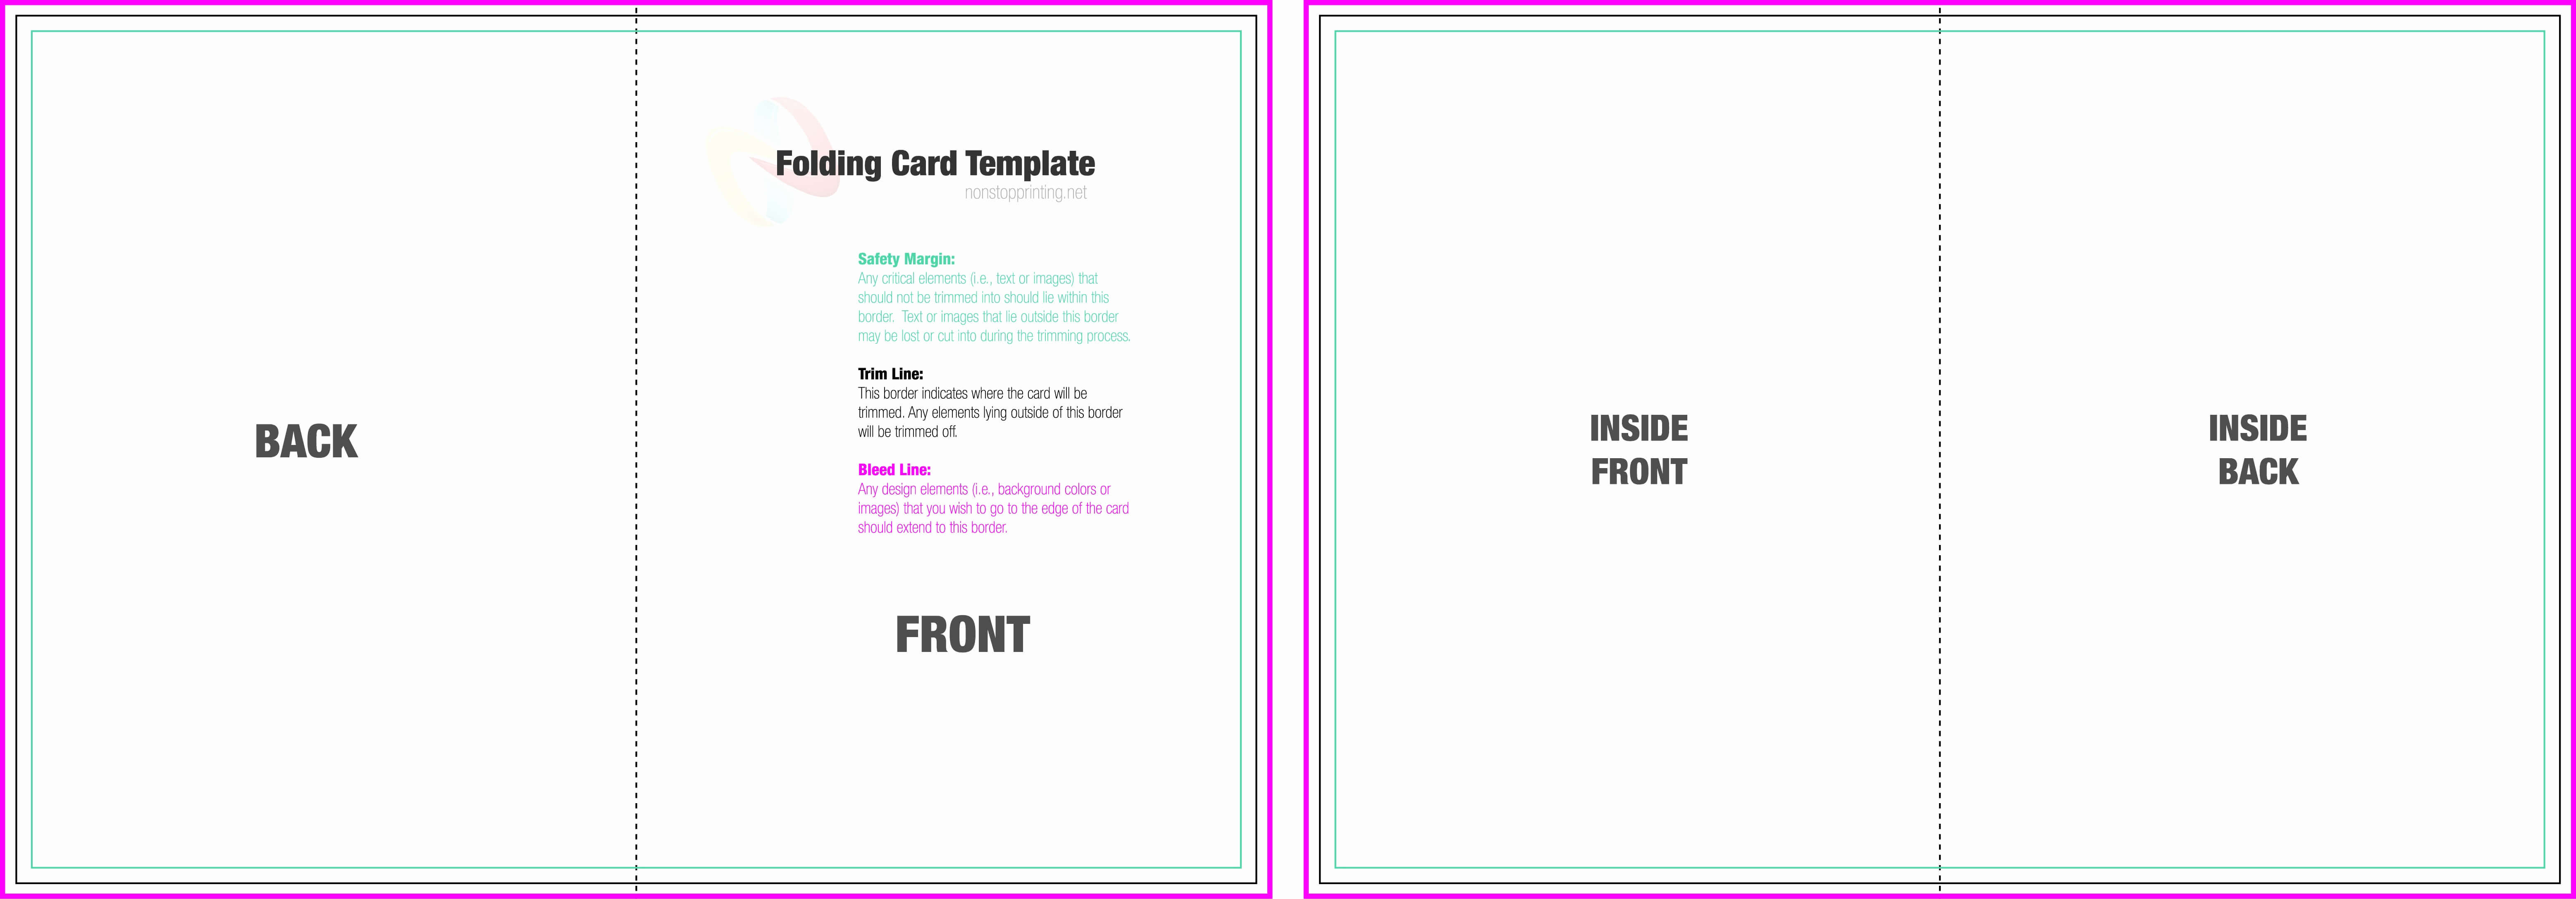 Cool Half Fold Greeting Card Template - Www.szf.se With Regard To Half Fold Greeting Card Template Word